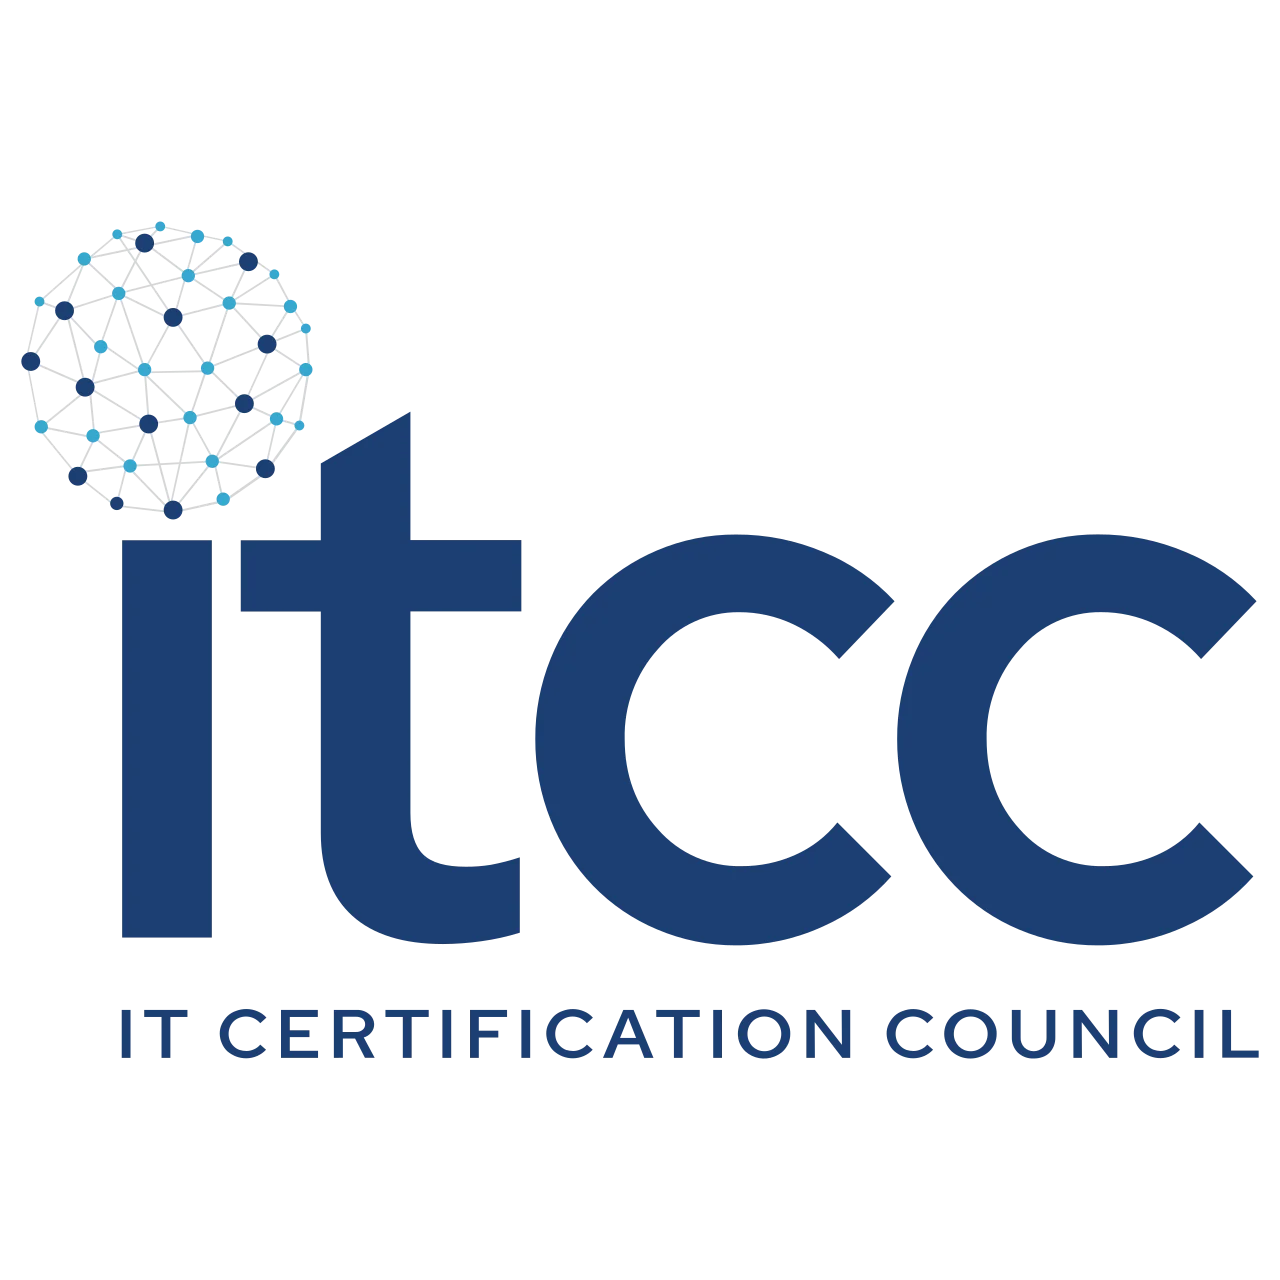 ITCC IT Certification council